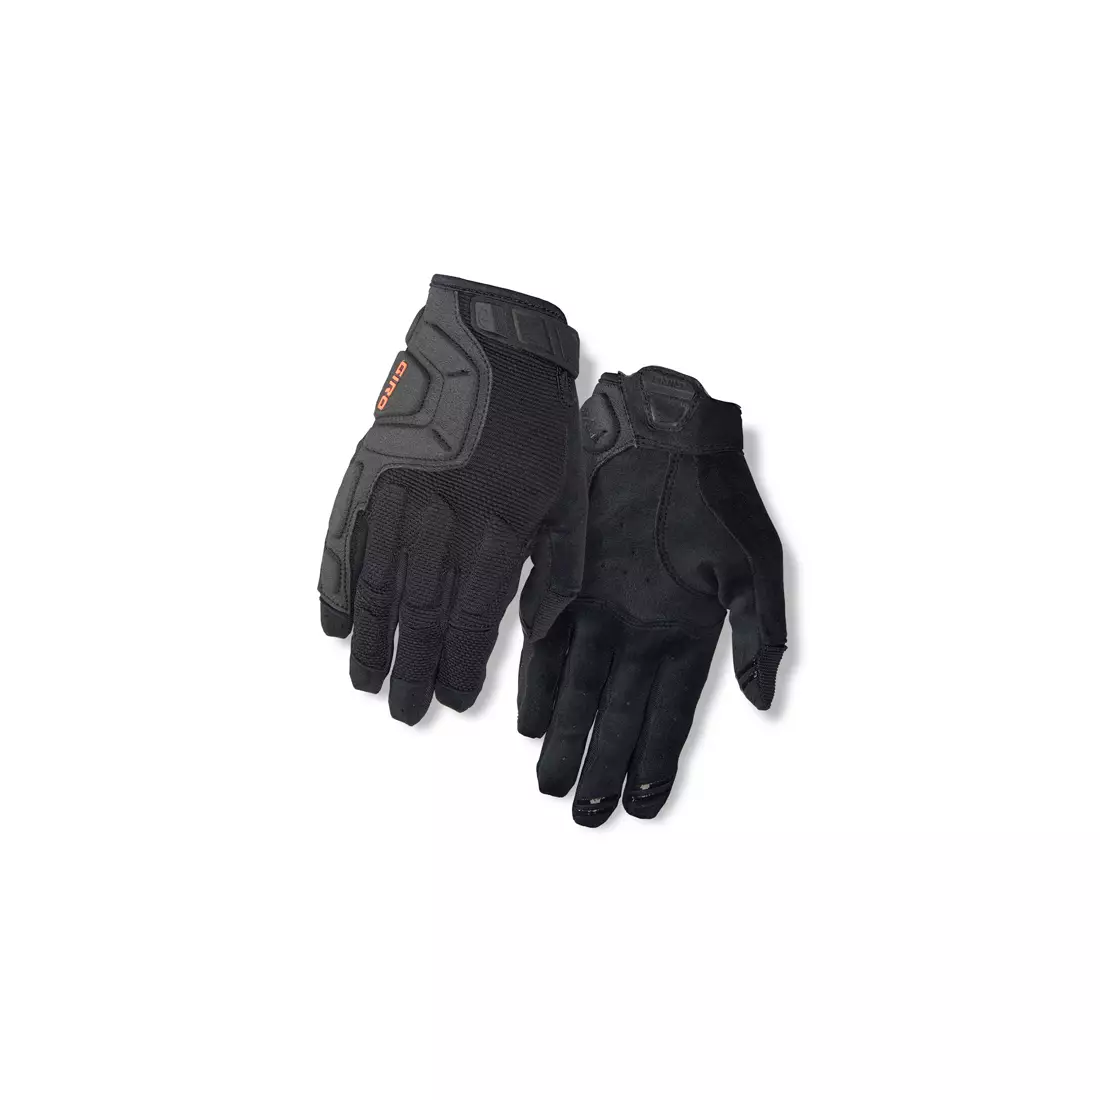 GIRO men's bicycle gloves remedy x2 black GR-7075835